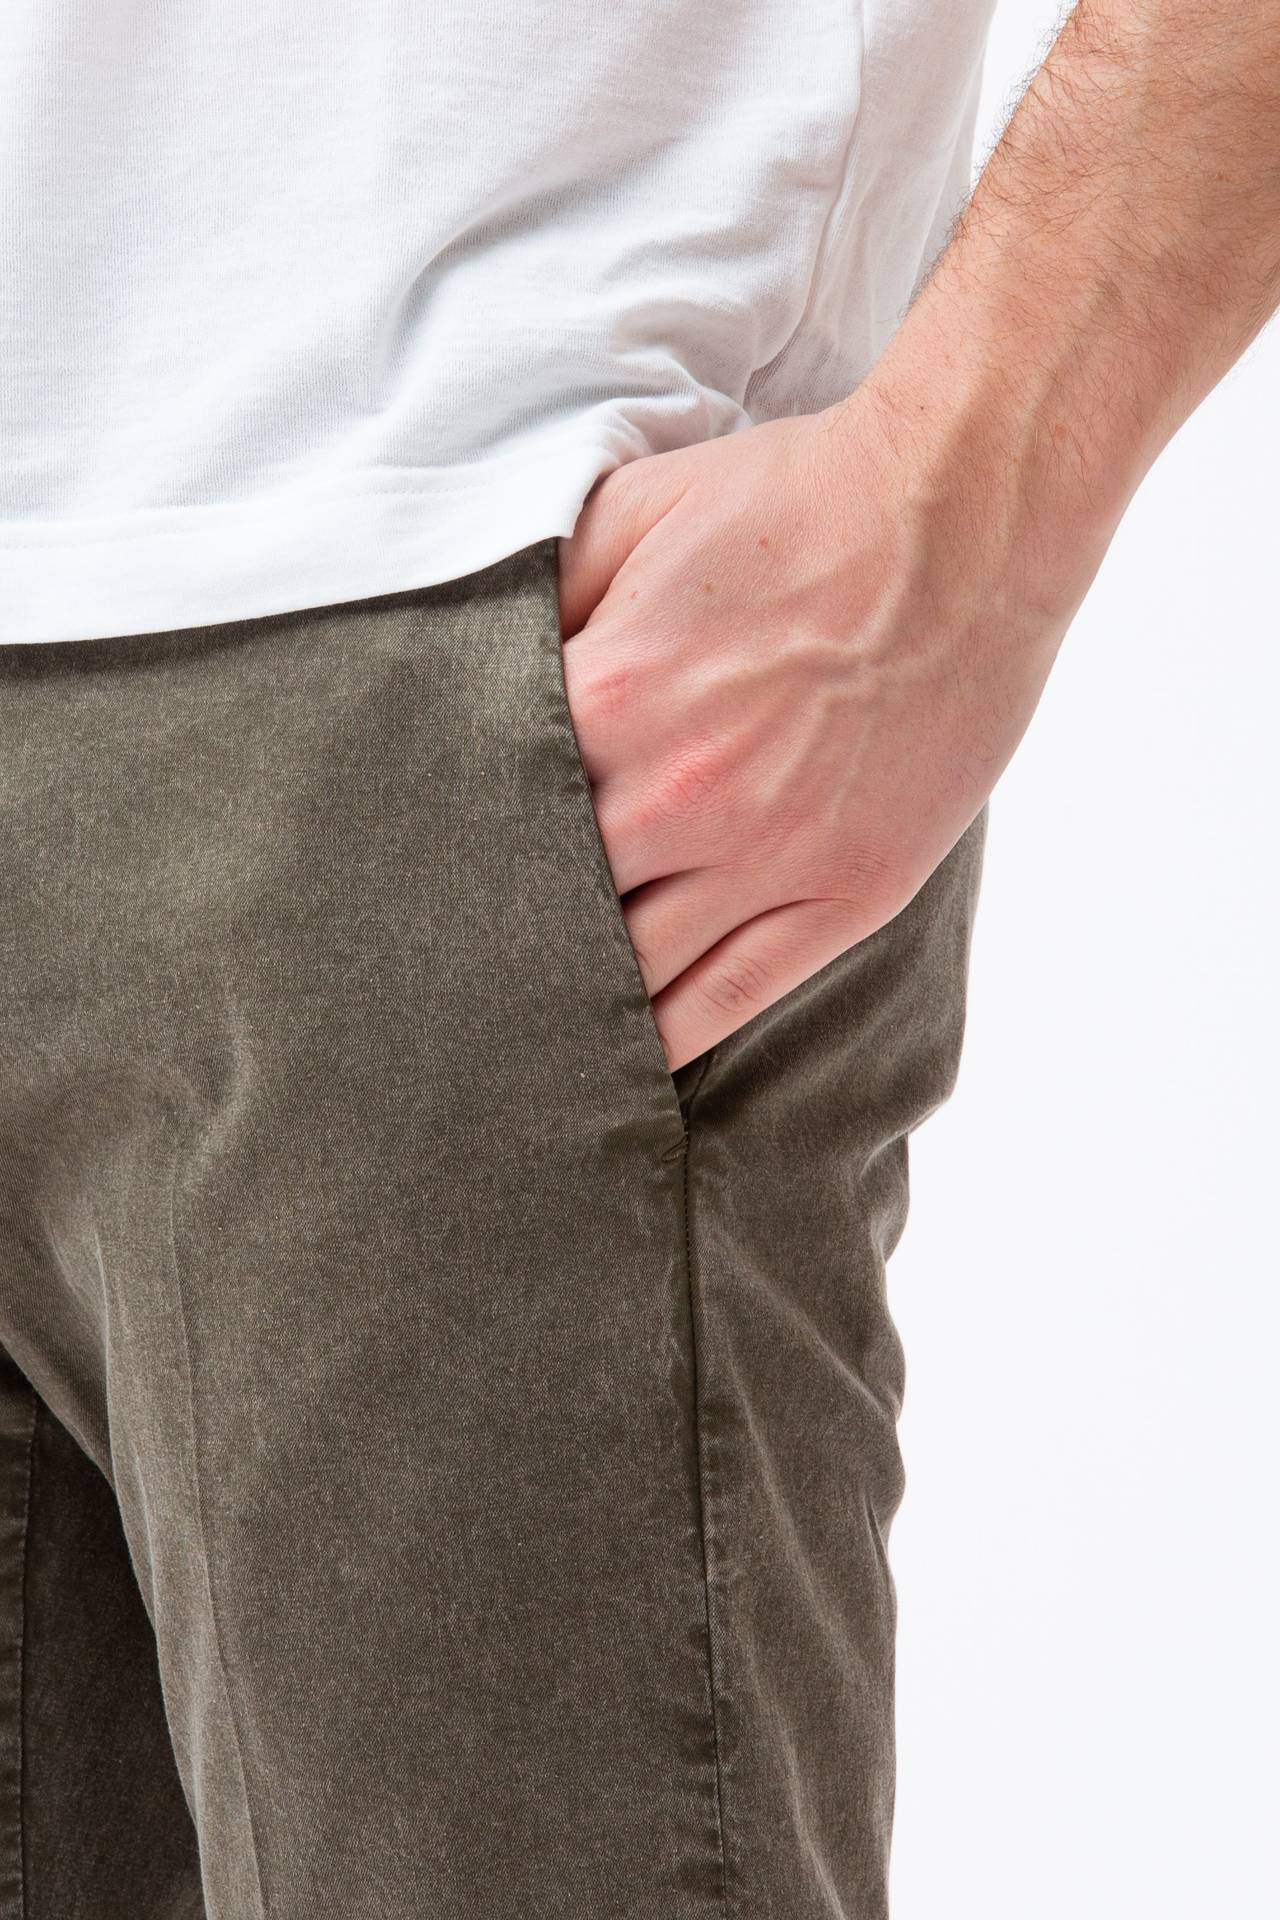 Pantalone in cotone stretch